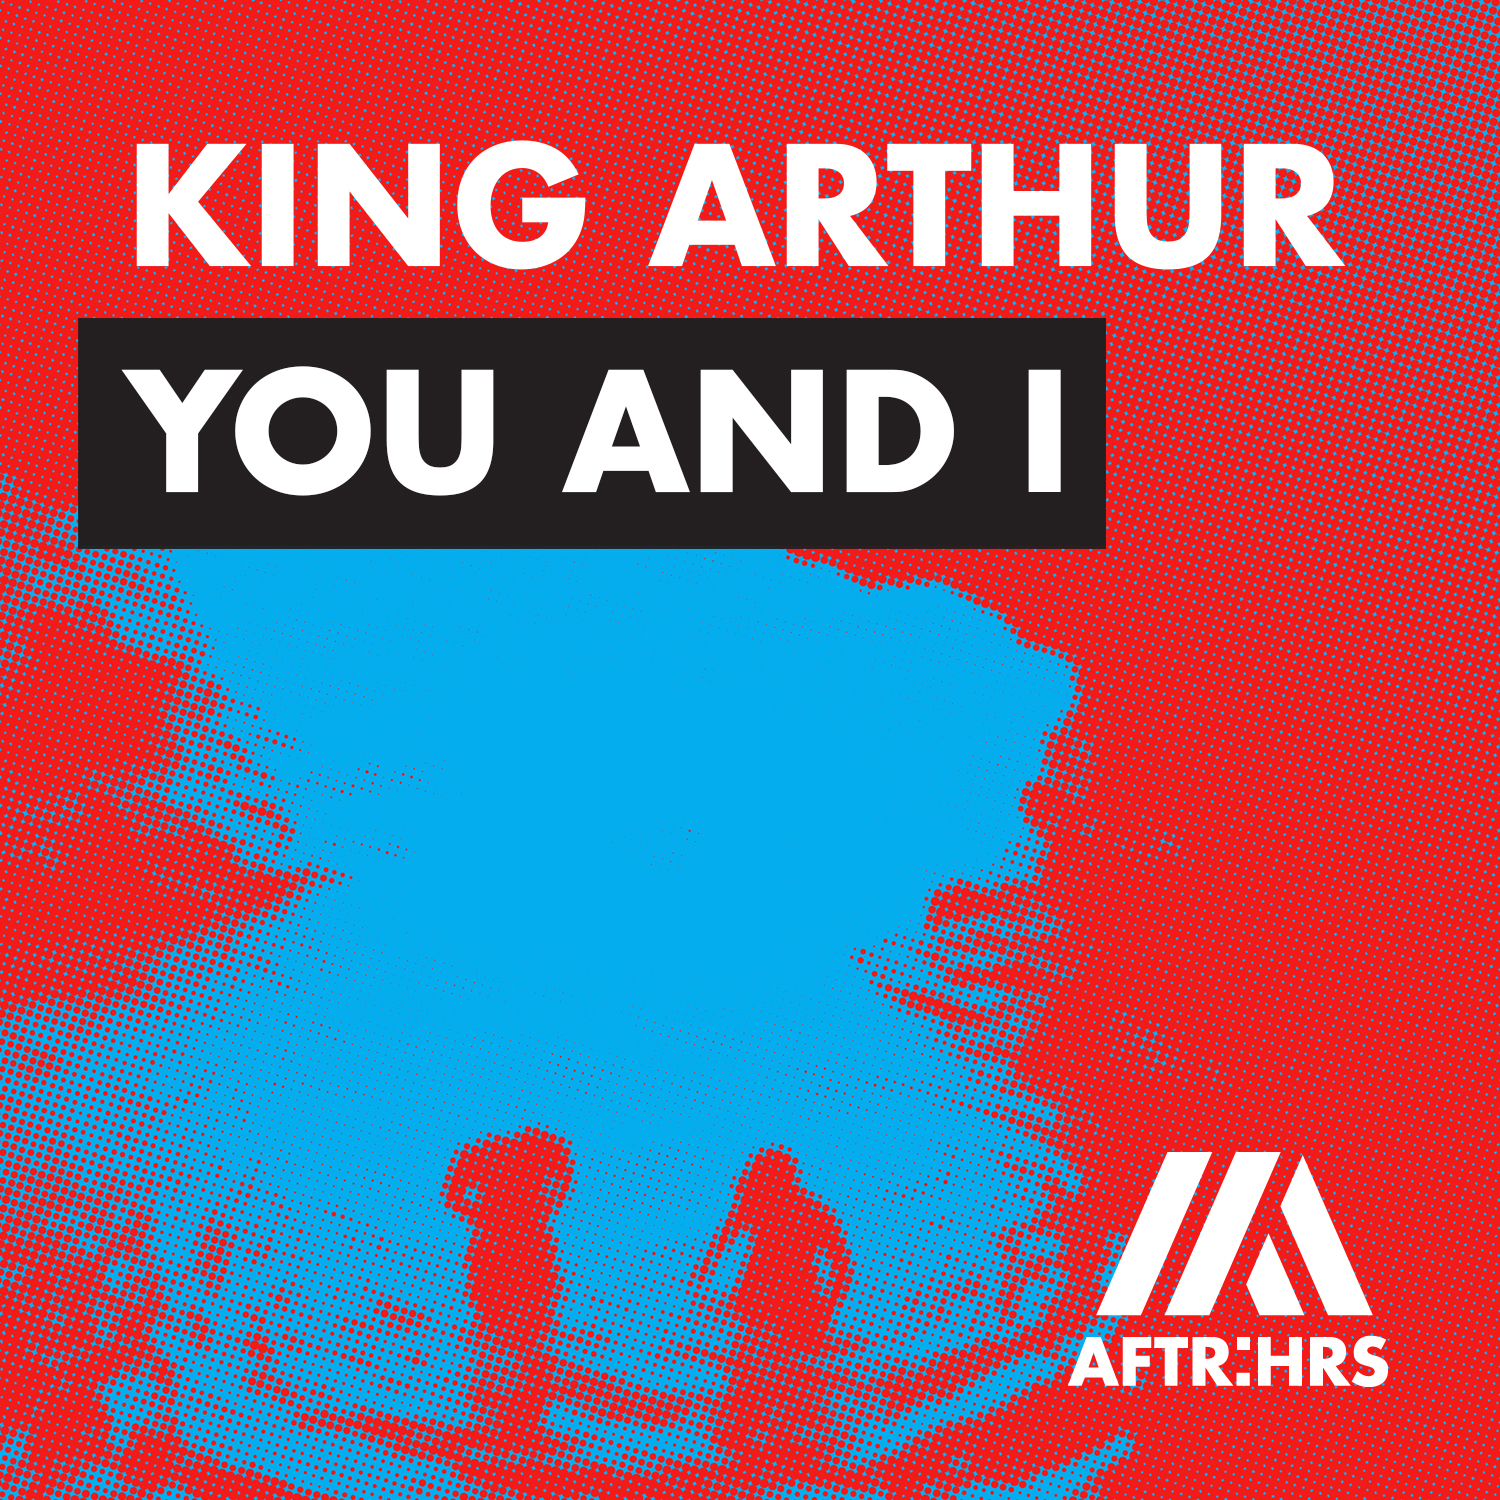 King Arthur Drops “You and I” on Tiesto’s AFTR:HRS